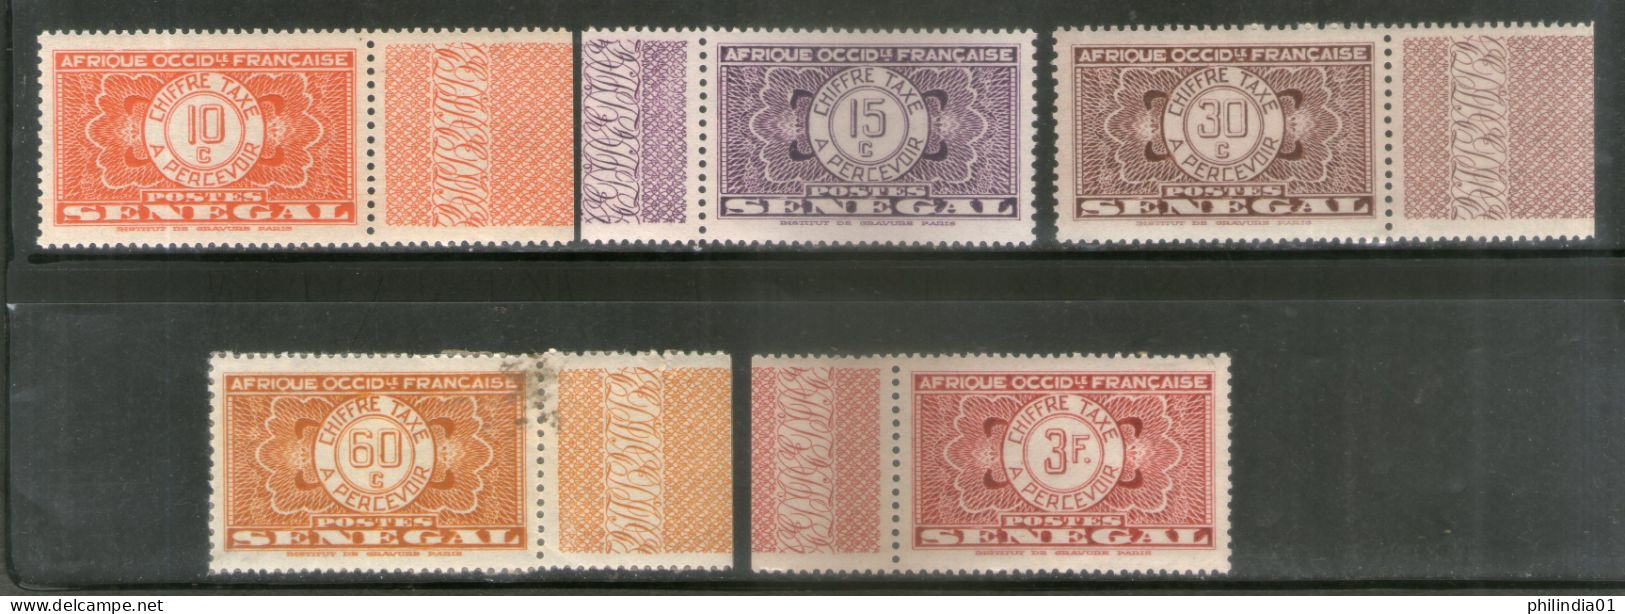 Senegal 1935 5 Diff. Postage Due Sc J23 Stamp With Tab MNH # 835 - Senegal (1960-...)